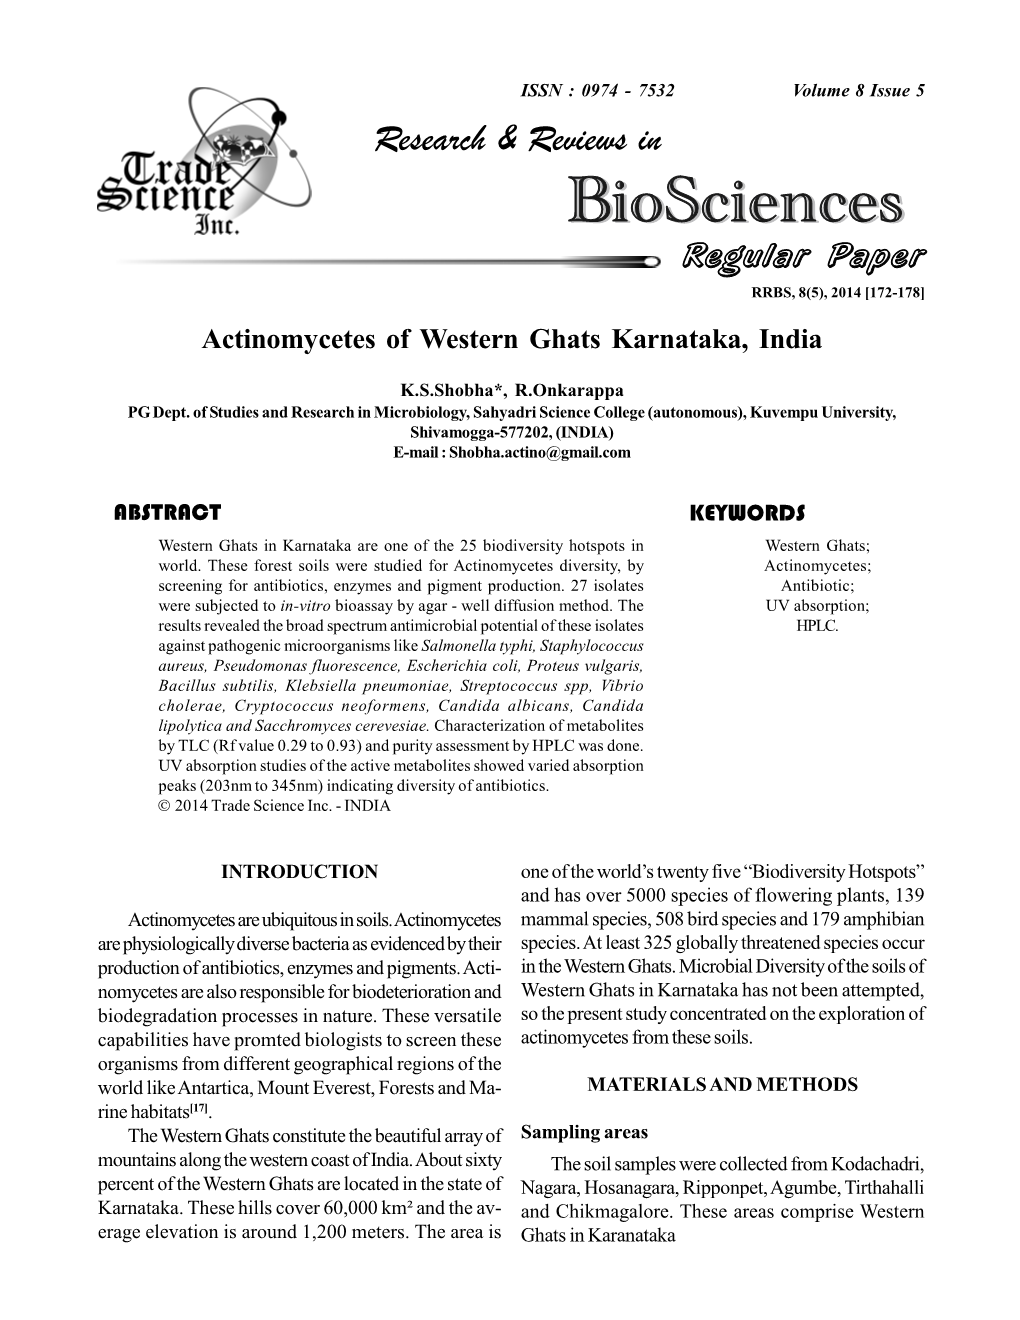 Actinomycetes of Western Ghats Karnataka, India